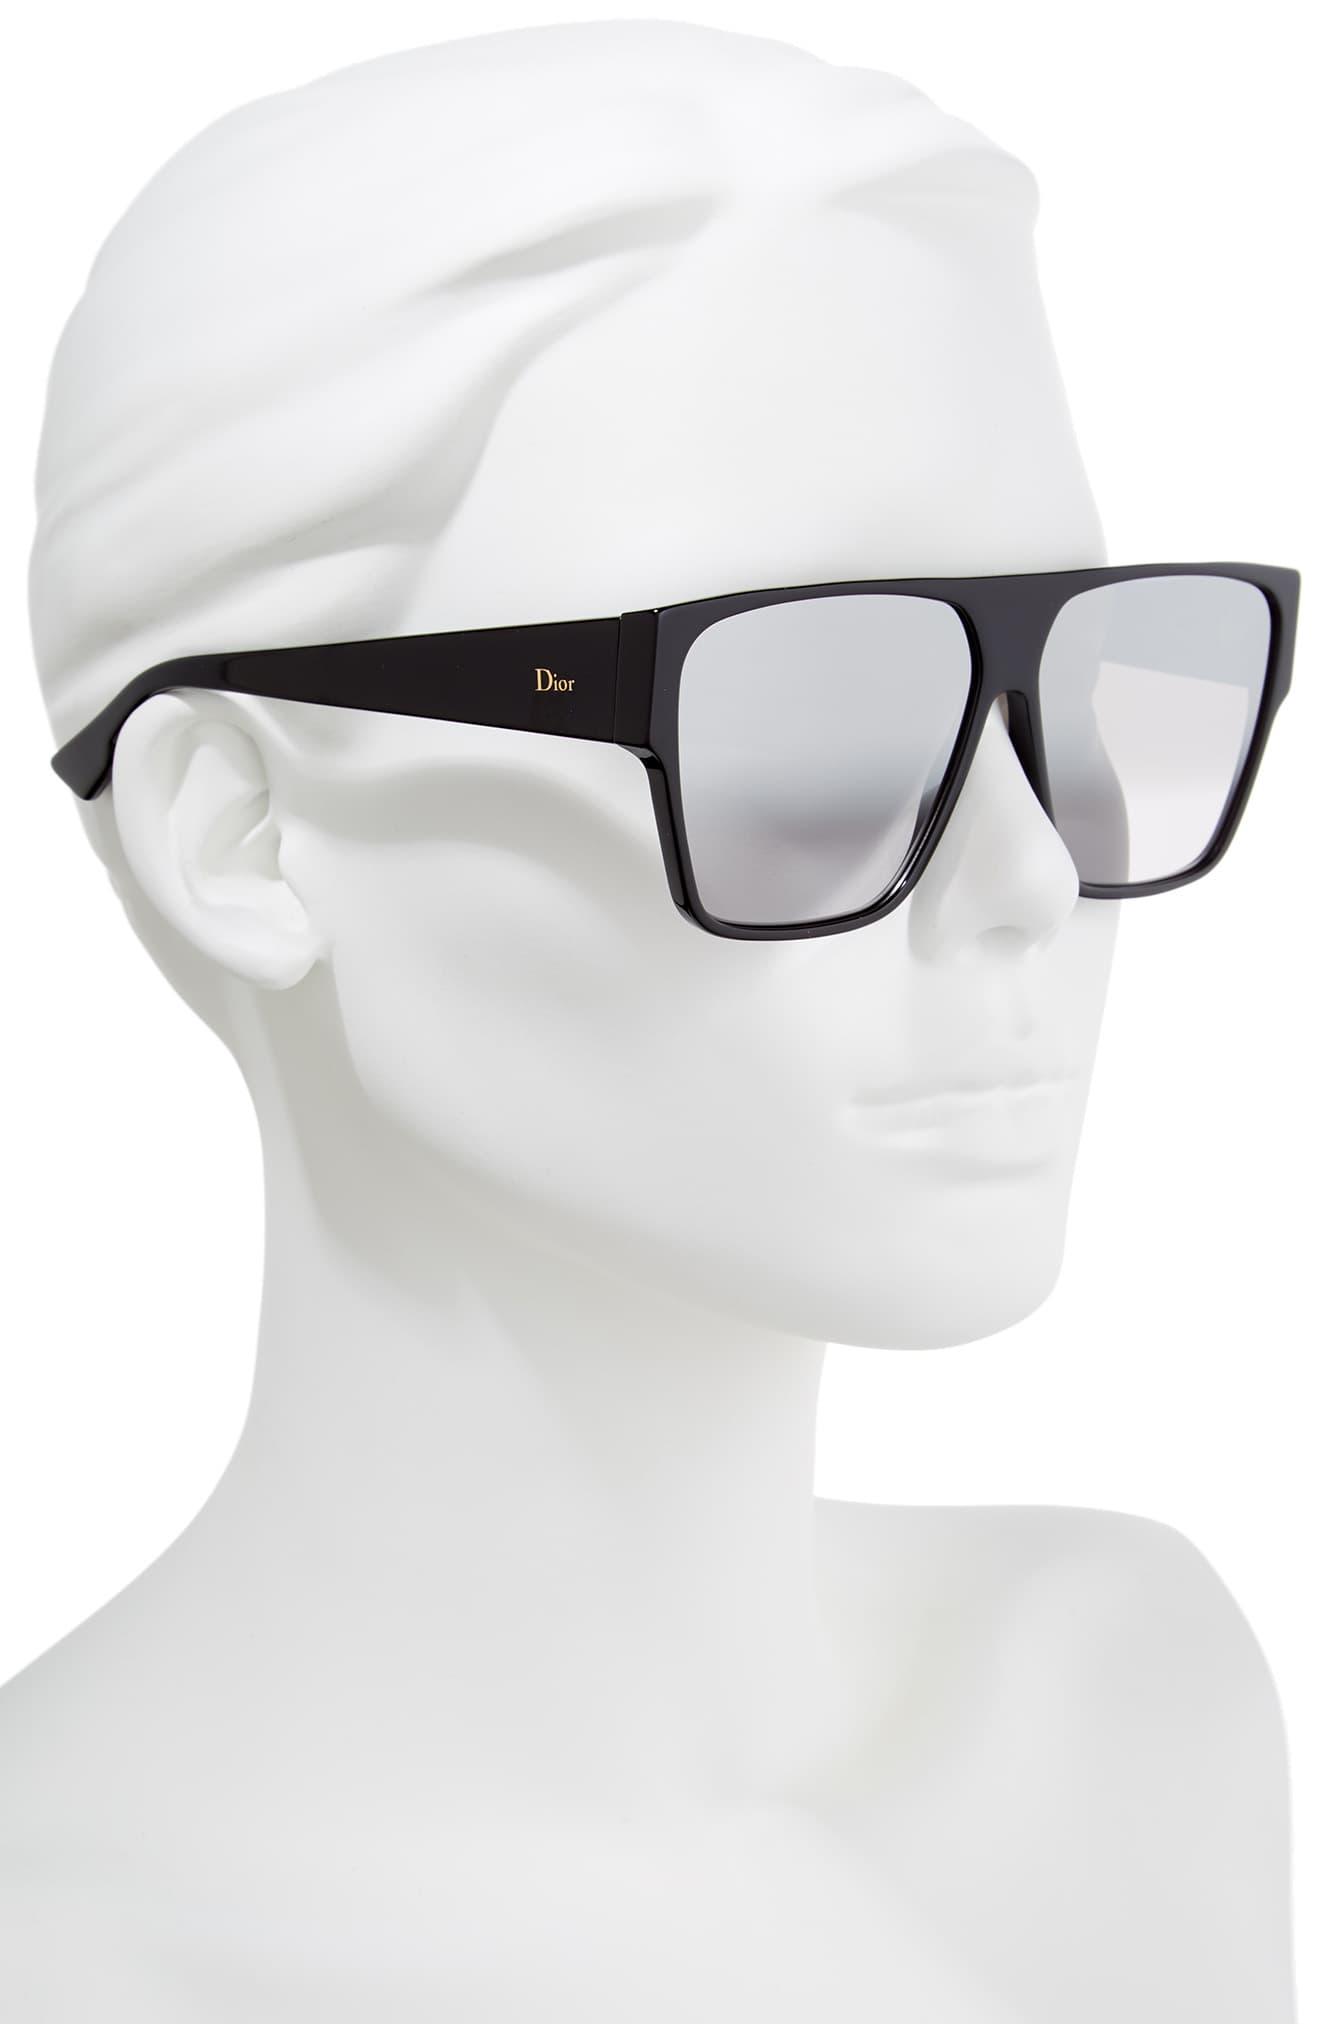 Dior 62mm Flat Top Square Sunglasses in 